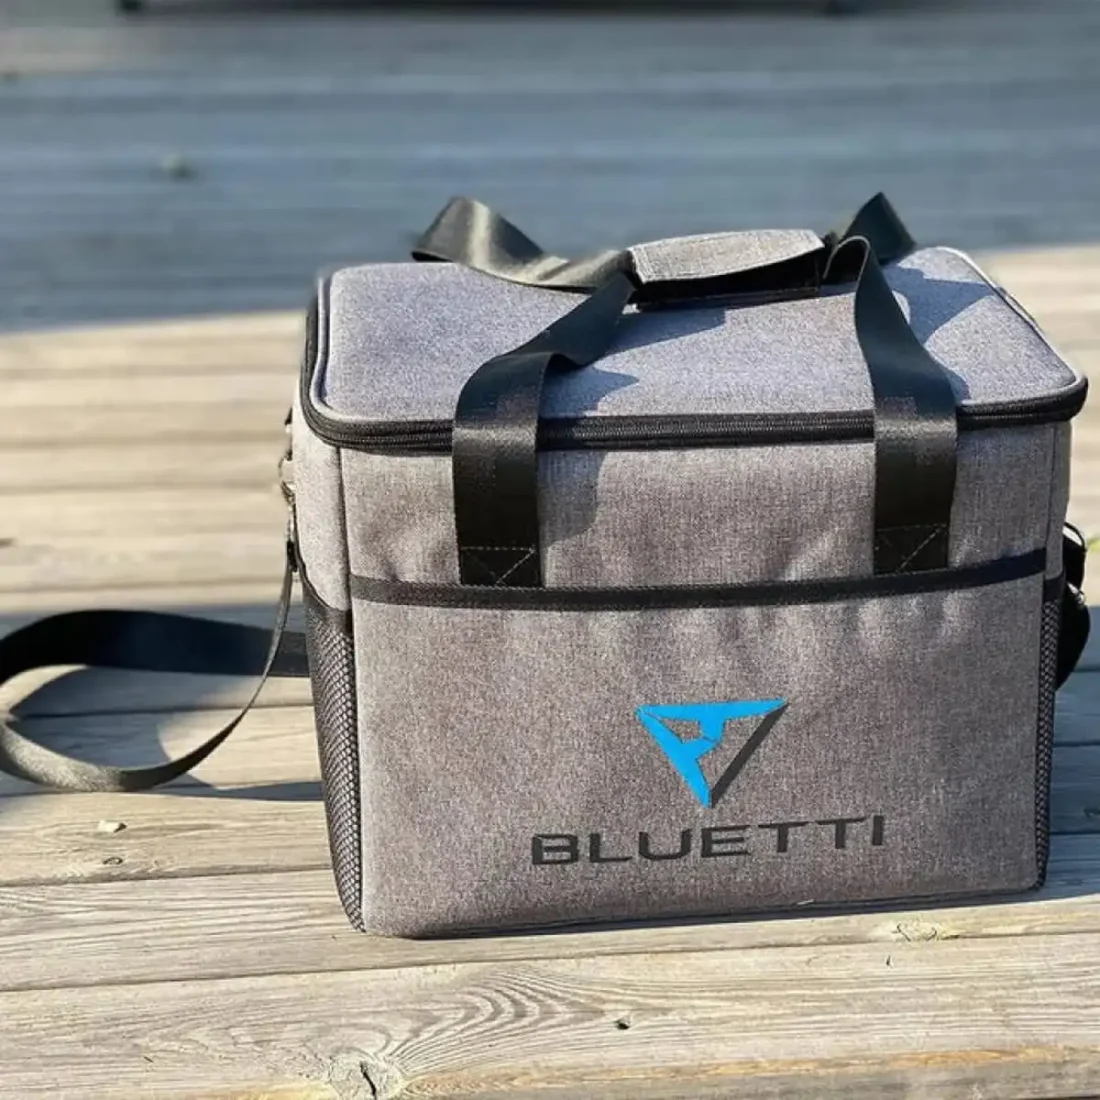 Bluetti Carrying Bag For EB3A/EB55/EB70